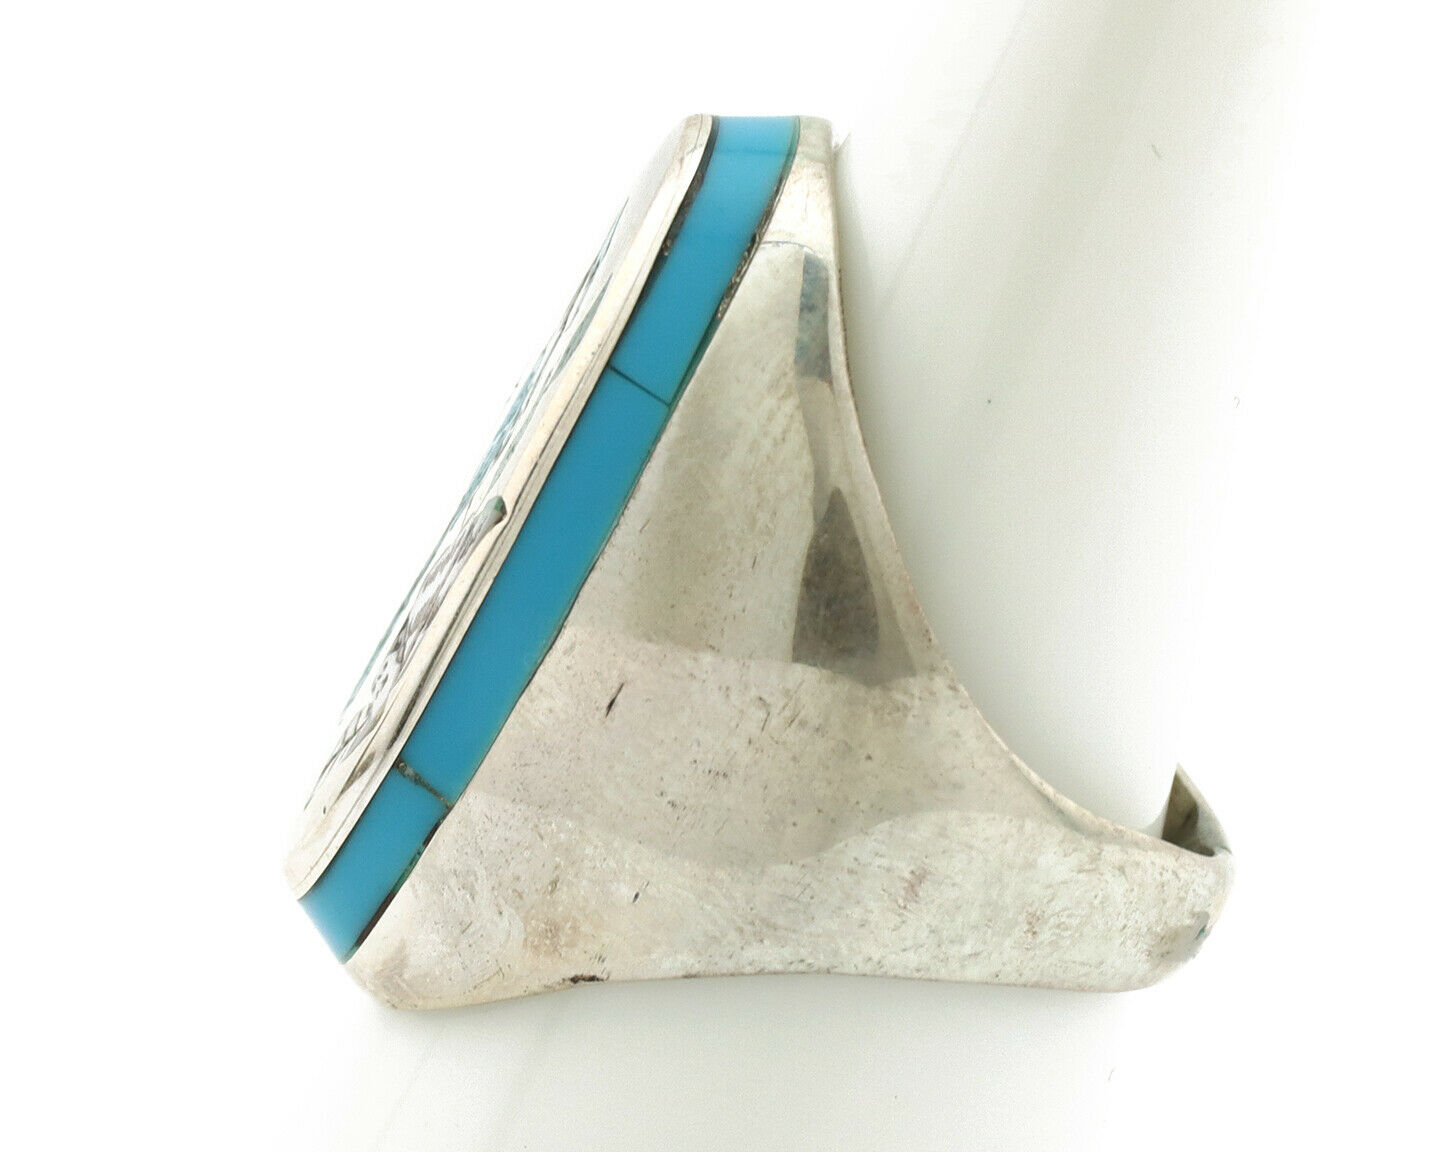 Zuni Inlaid Blue Jay Bird Ring .925 Silver Artist Henry & Linda Barber C.1980's